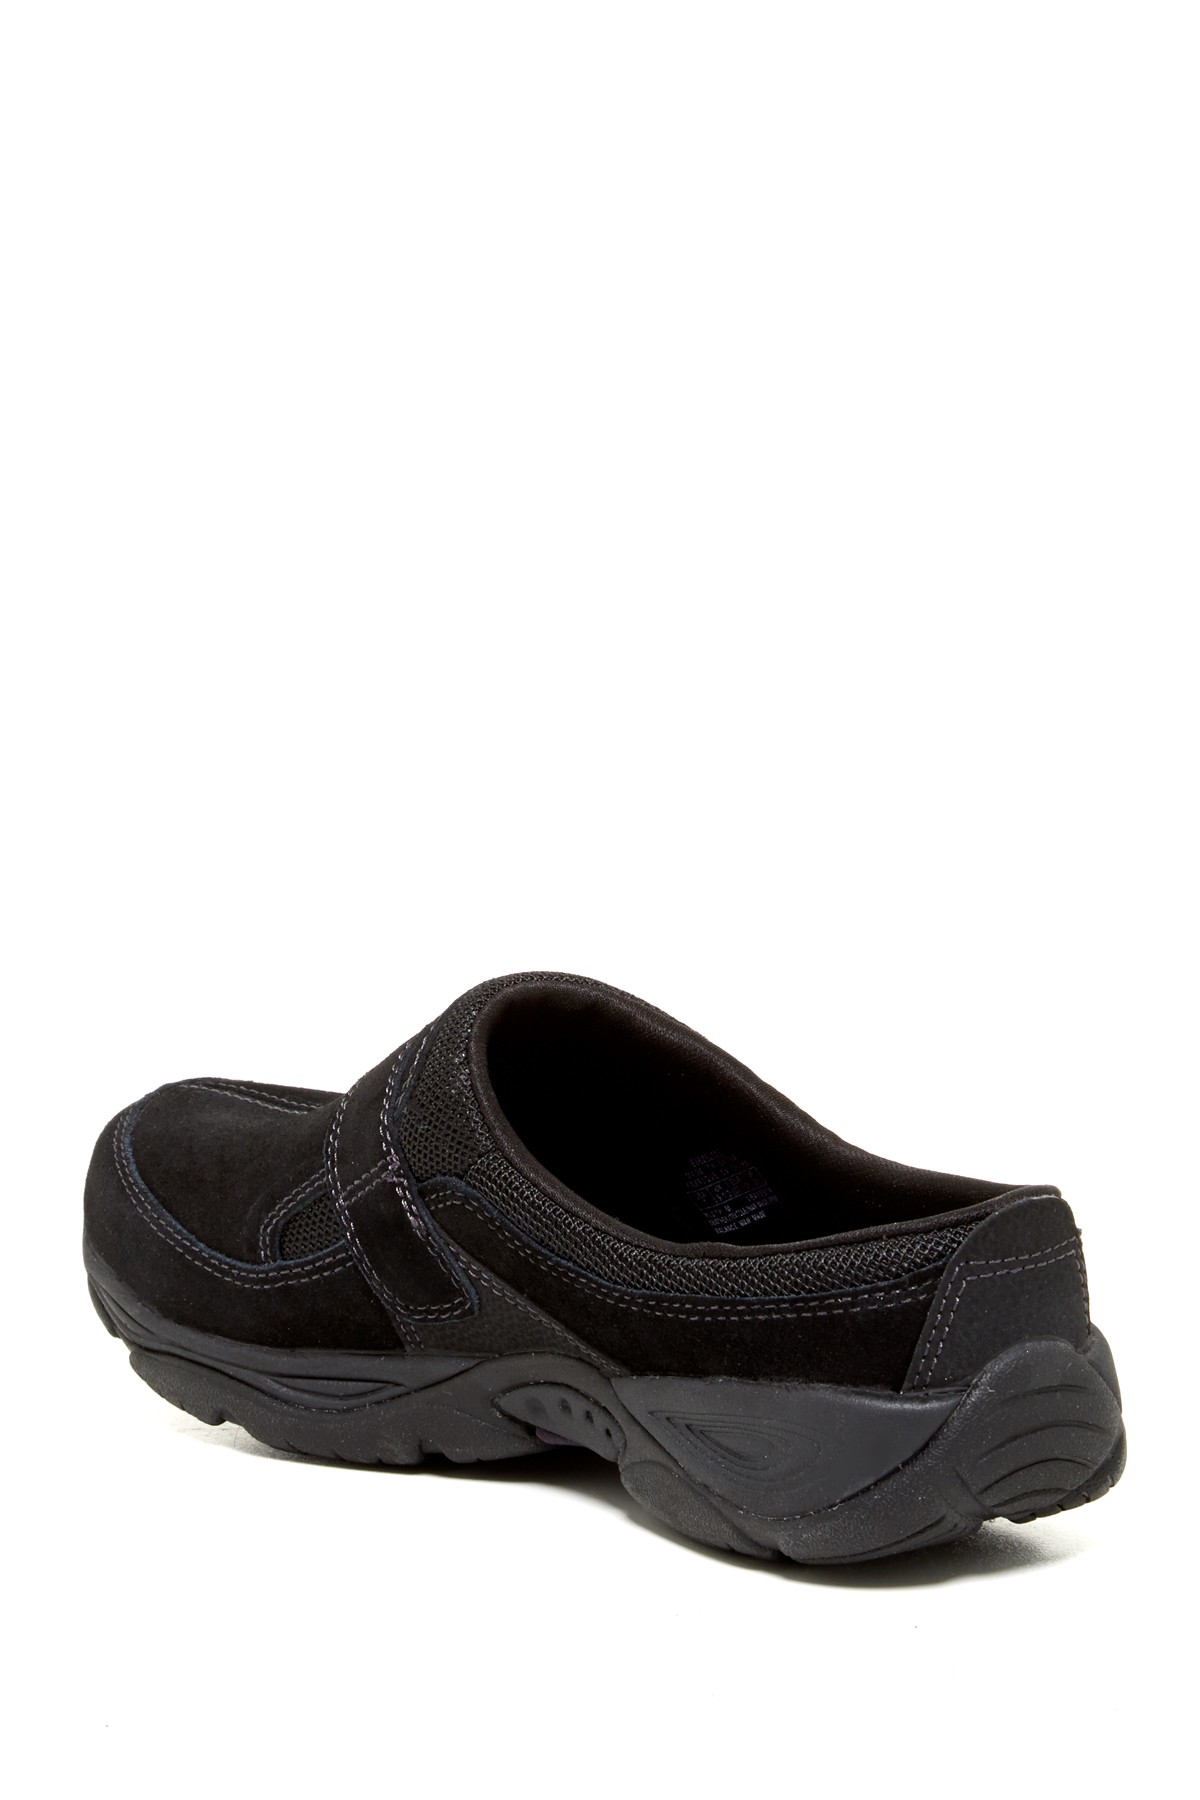 Easy Spirit Suede Ez Slide Slip-on Shoe - Wide Width Available in Black ...